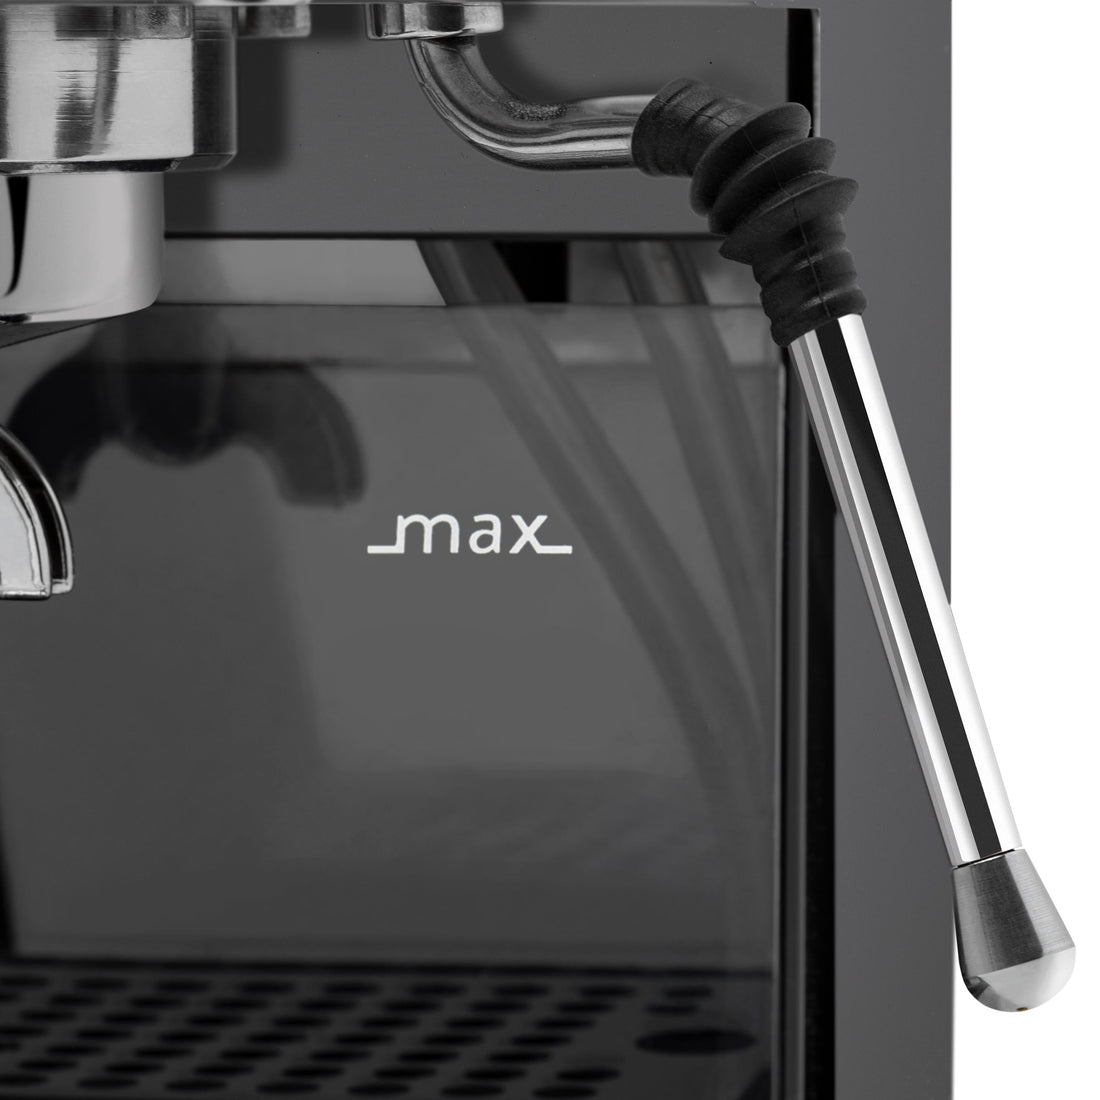 Gaggia Classic Evo Pro Espresso Machine in Industrial Grey with Blackened Oak